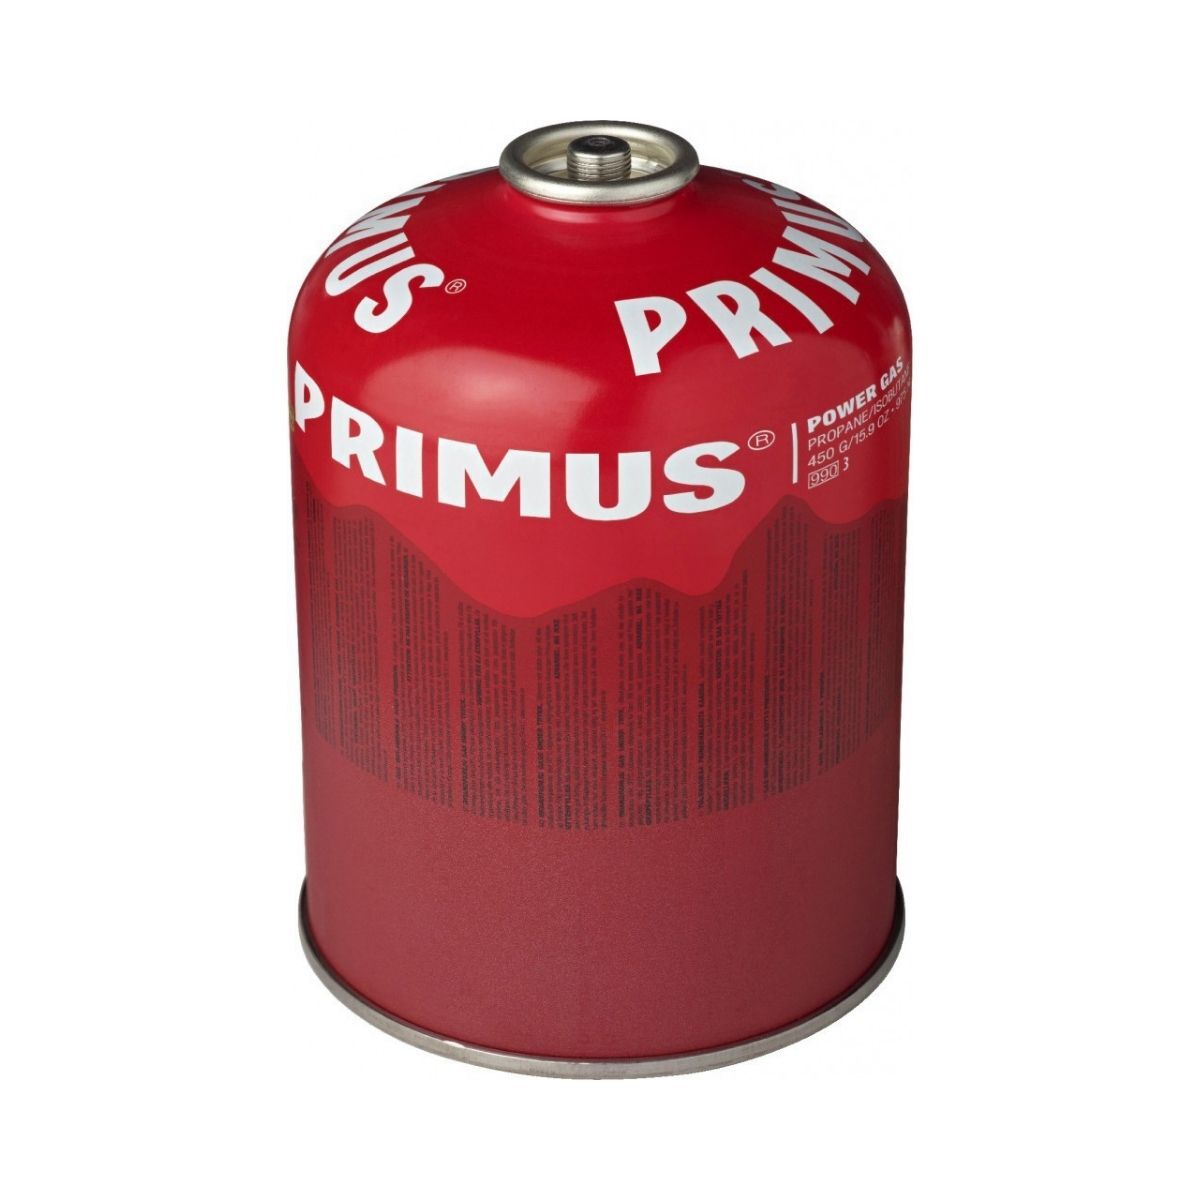 Primus Power Gas 450 g L2 - Cartucho de gas